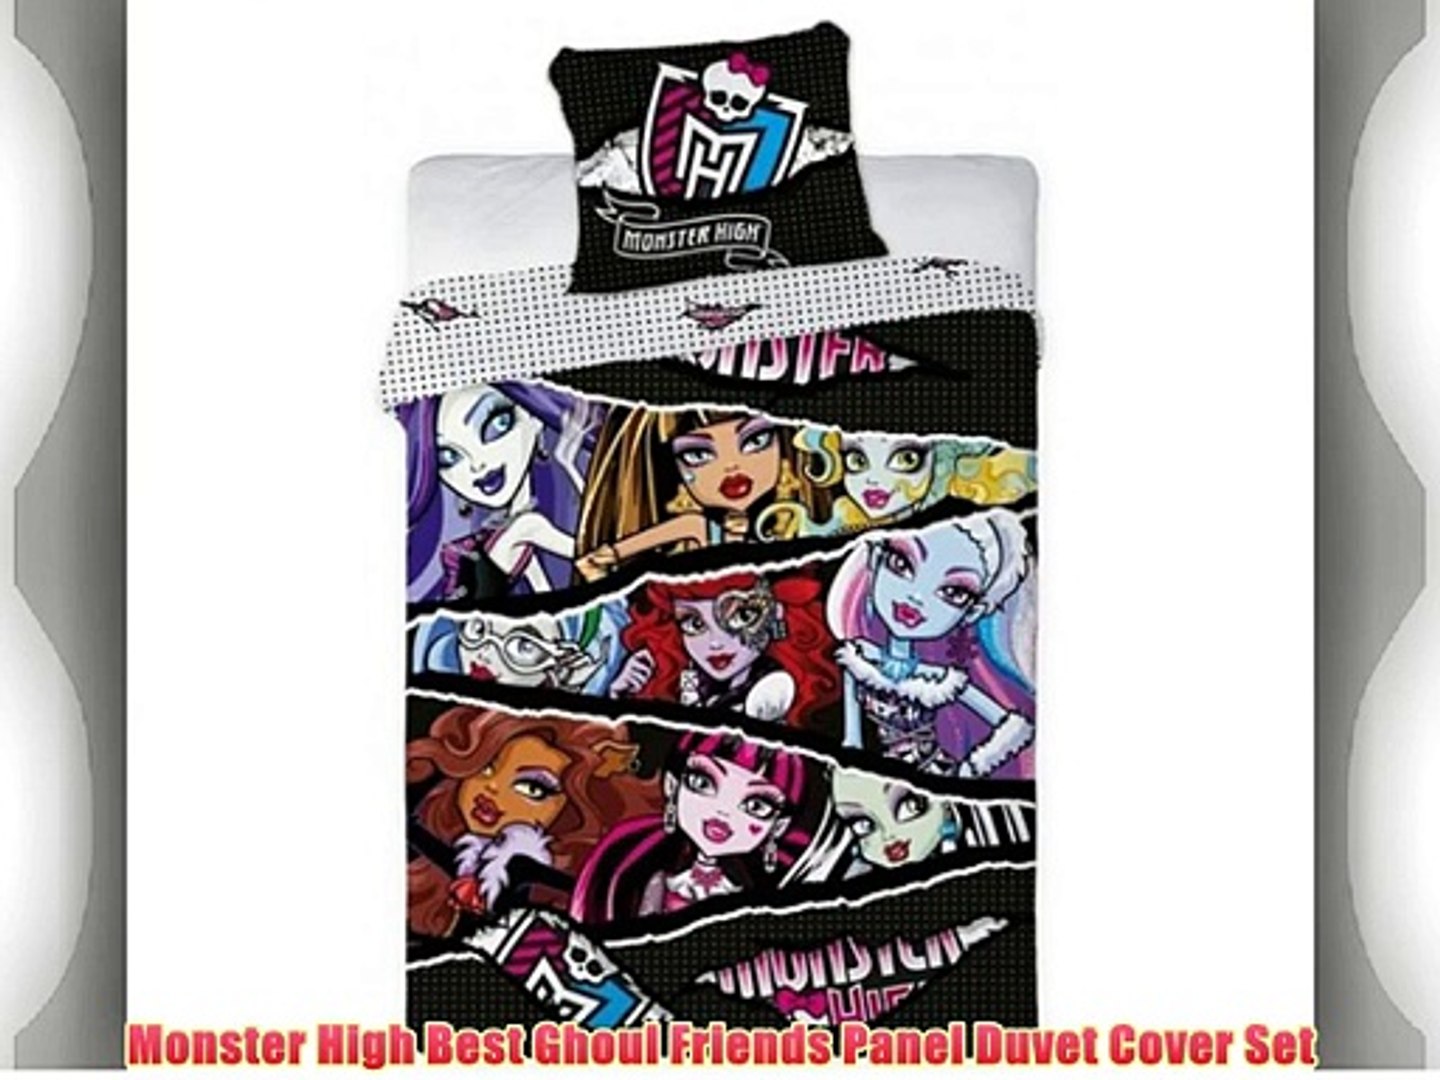 Monster High Best Ghoul Friends Panel Duvet Cover Set Video